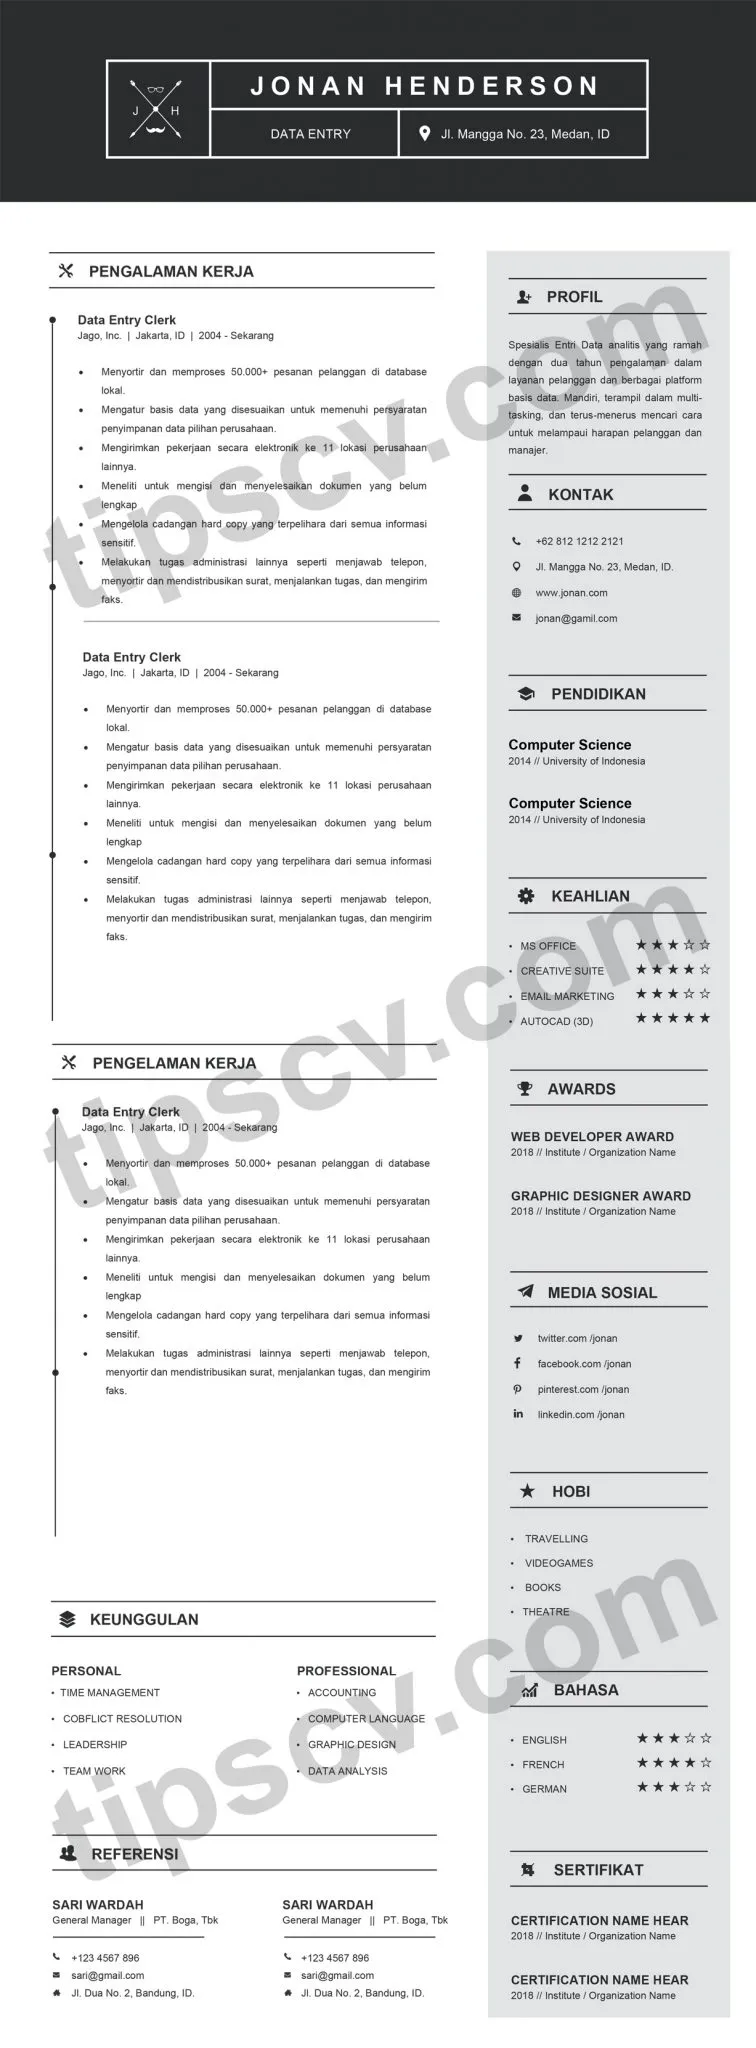 Contoh CV Data Entry - Download Template Resume Gratis